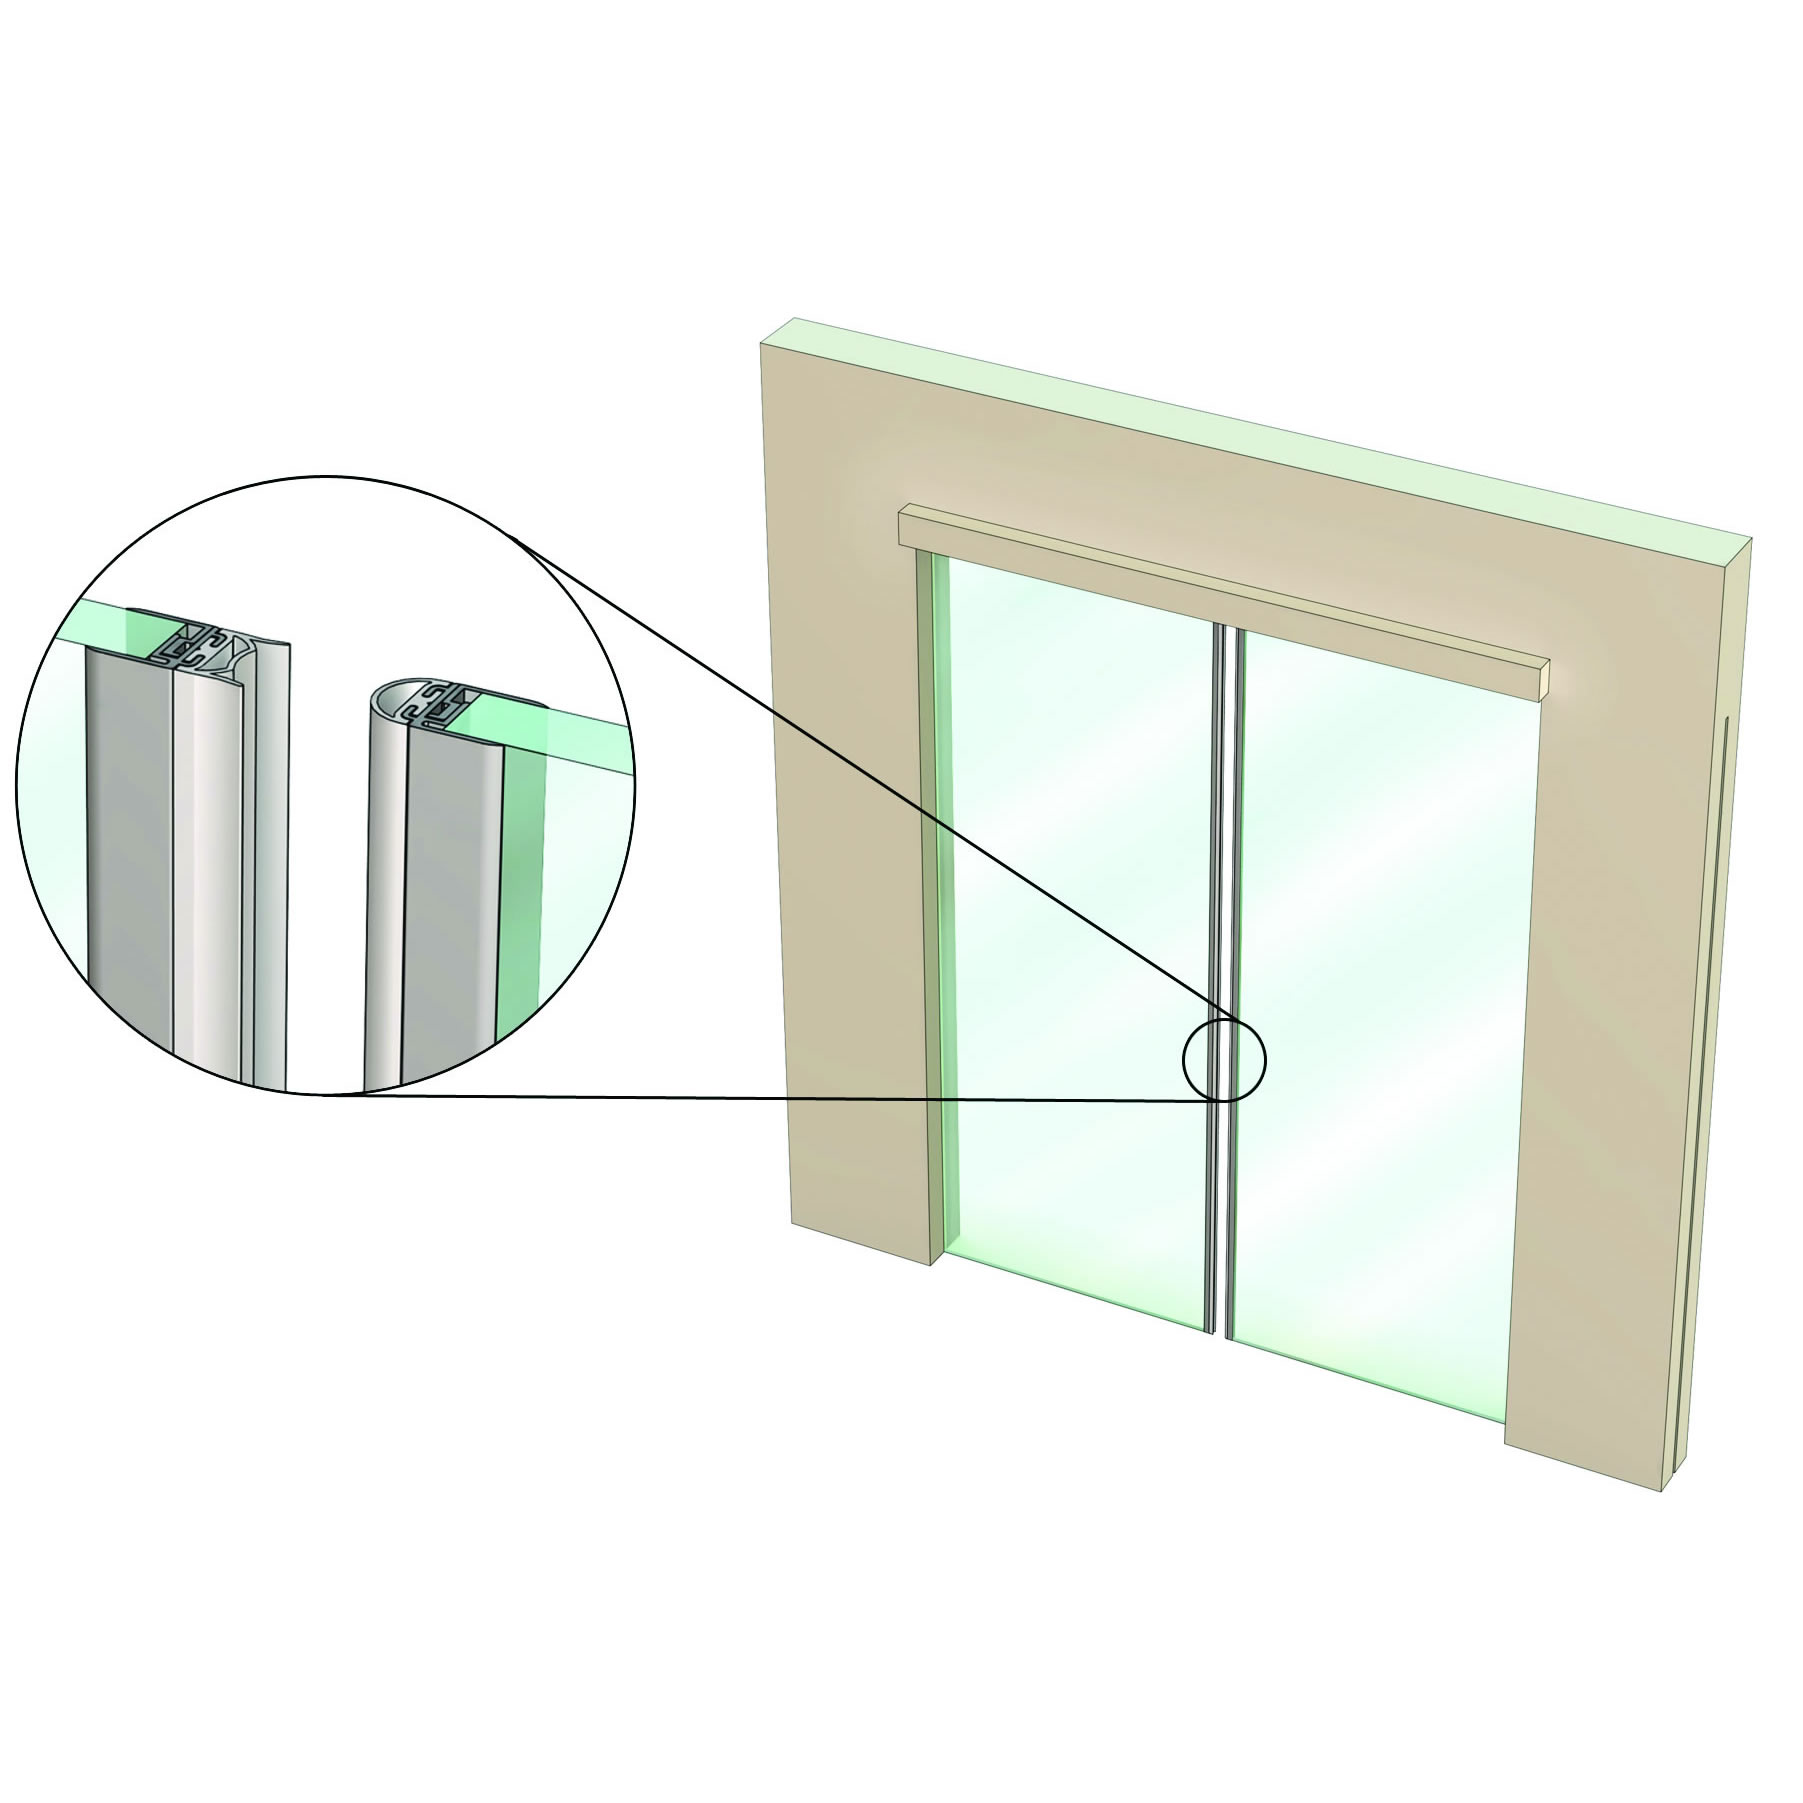 Kilargo IS7300si system for Double Leaf, Frameless Glass Pivot Doors